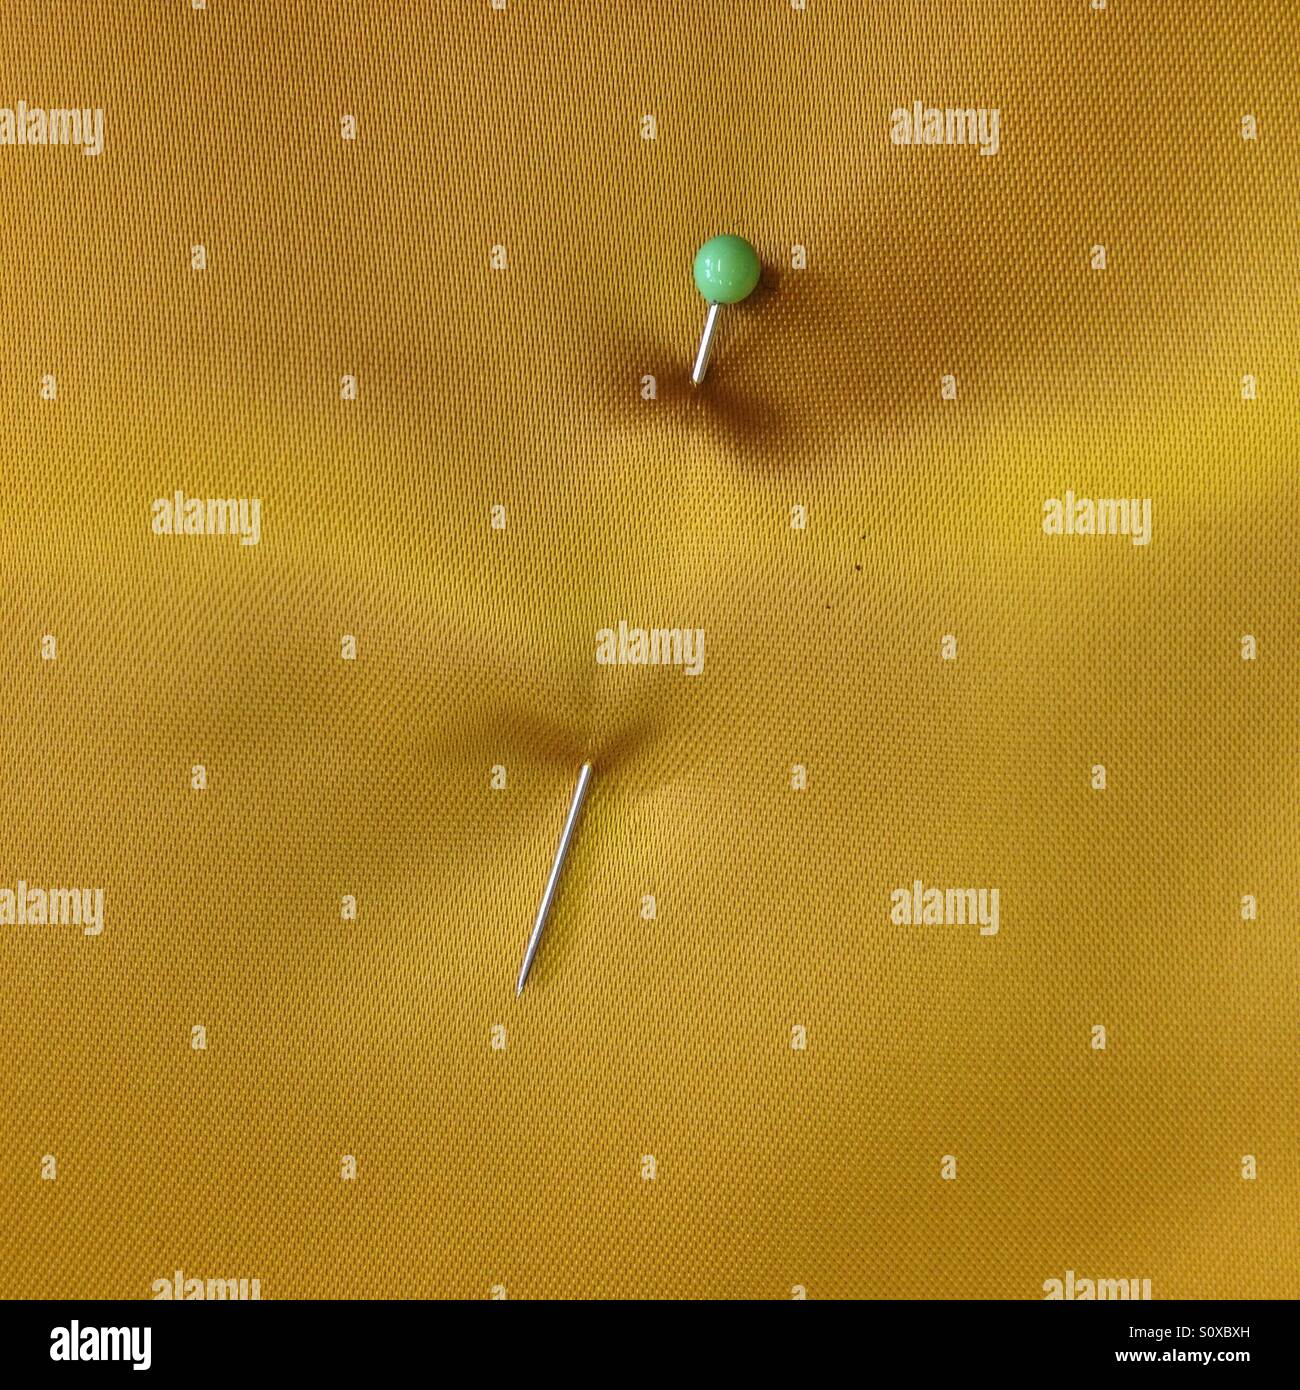 Sewing pin in yellow satin Stock Photo